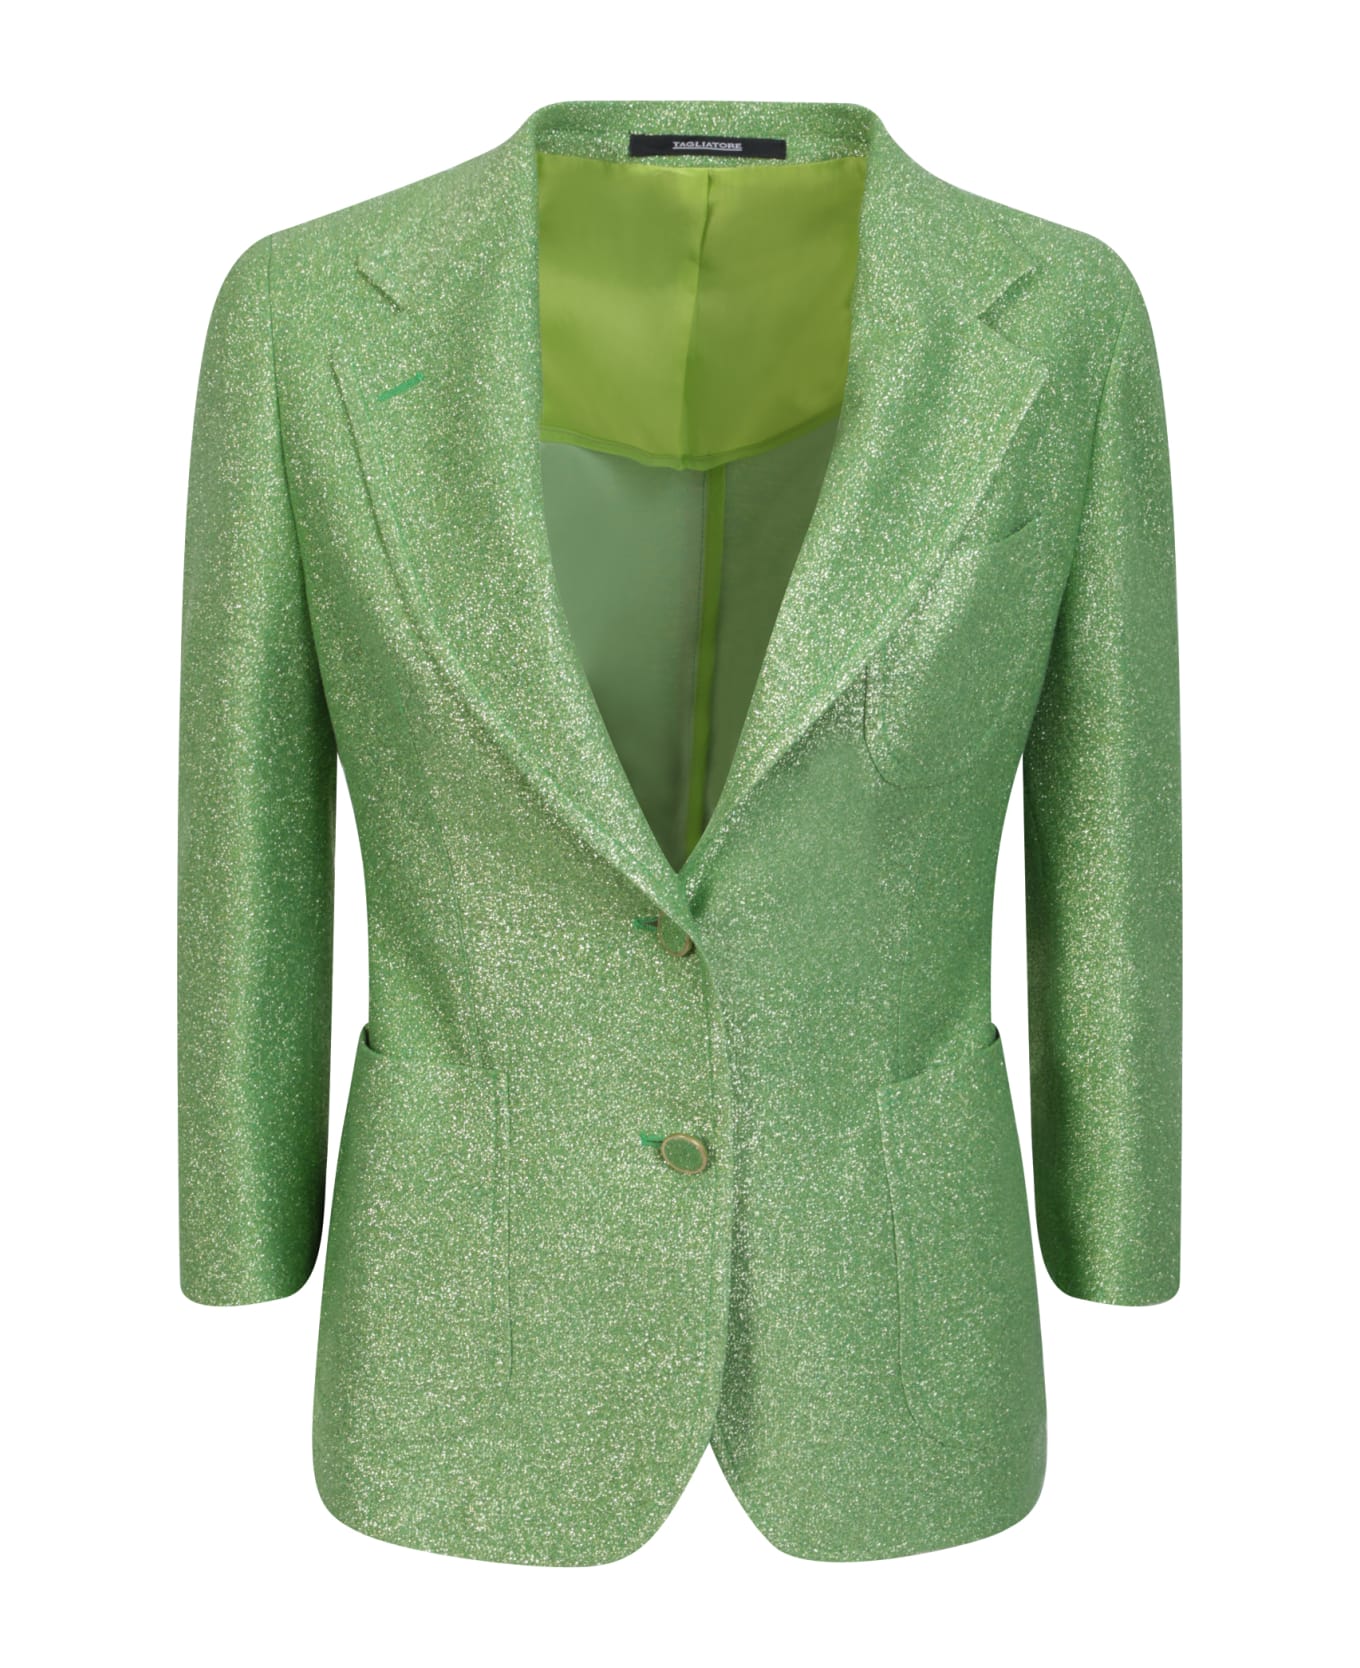 Tagliatore Debra Jacket In Green - Green